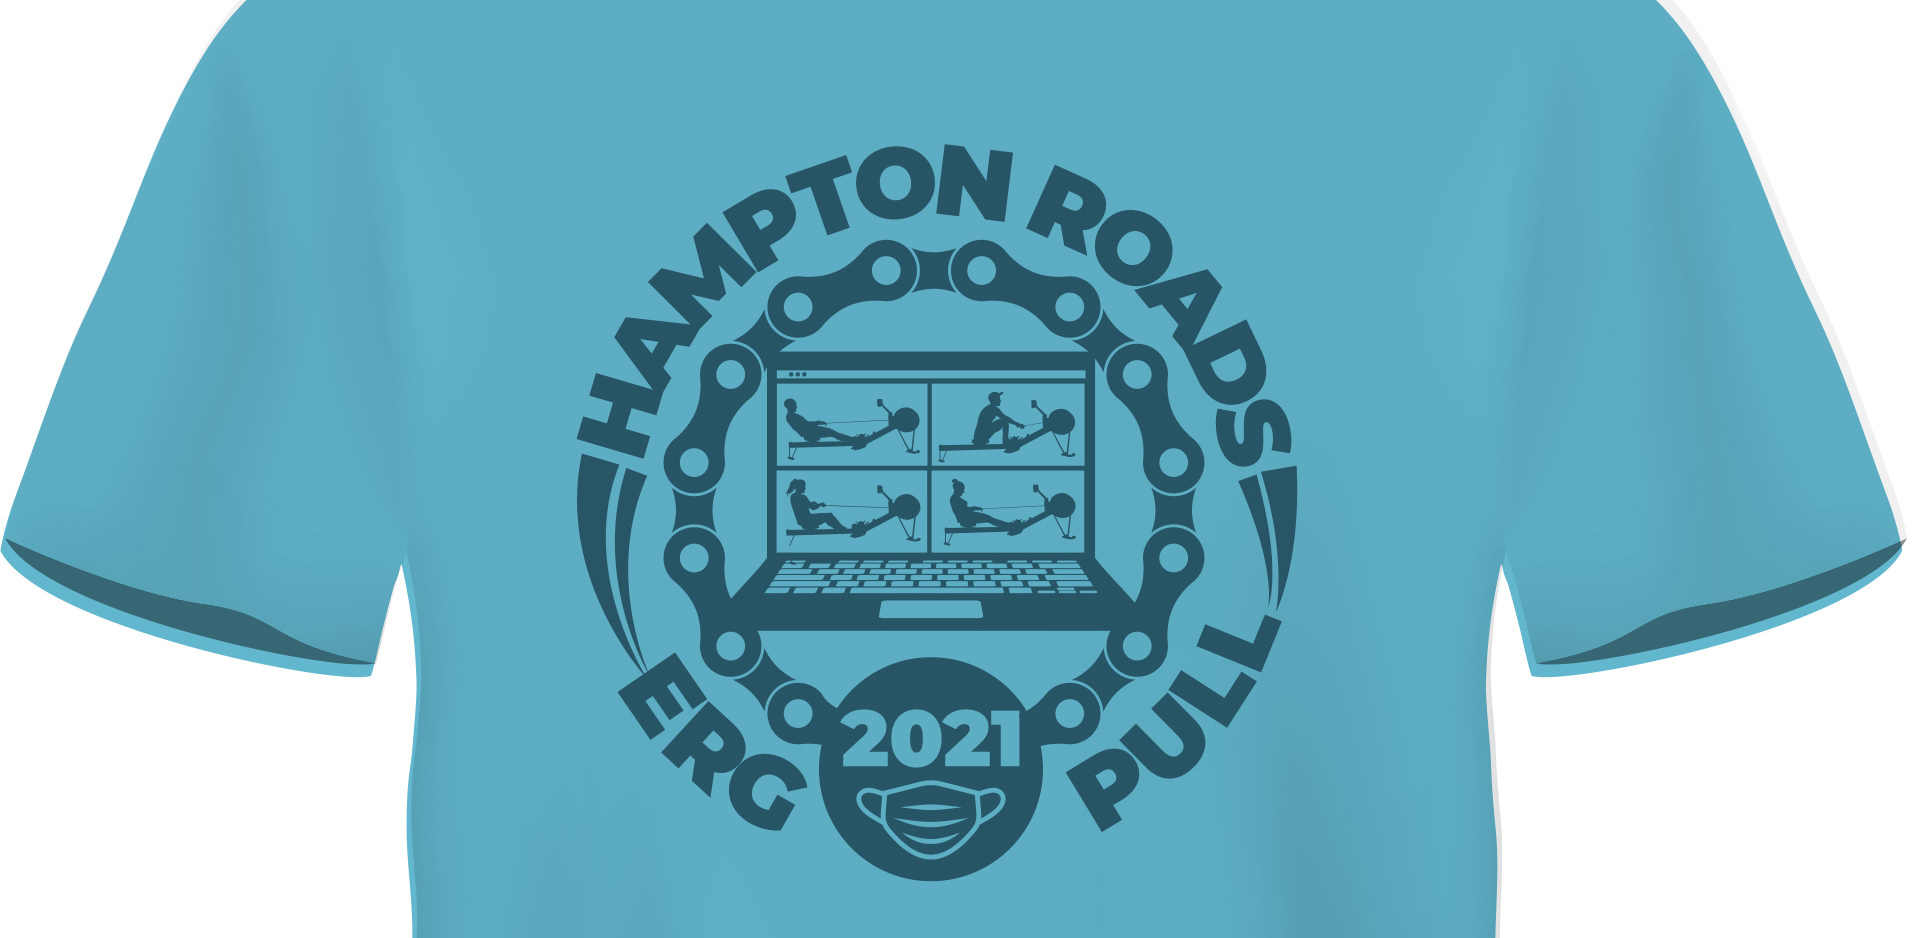 New T-shirt Design for Hampton Roads Erg Pull 2021